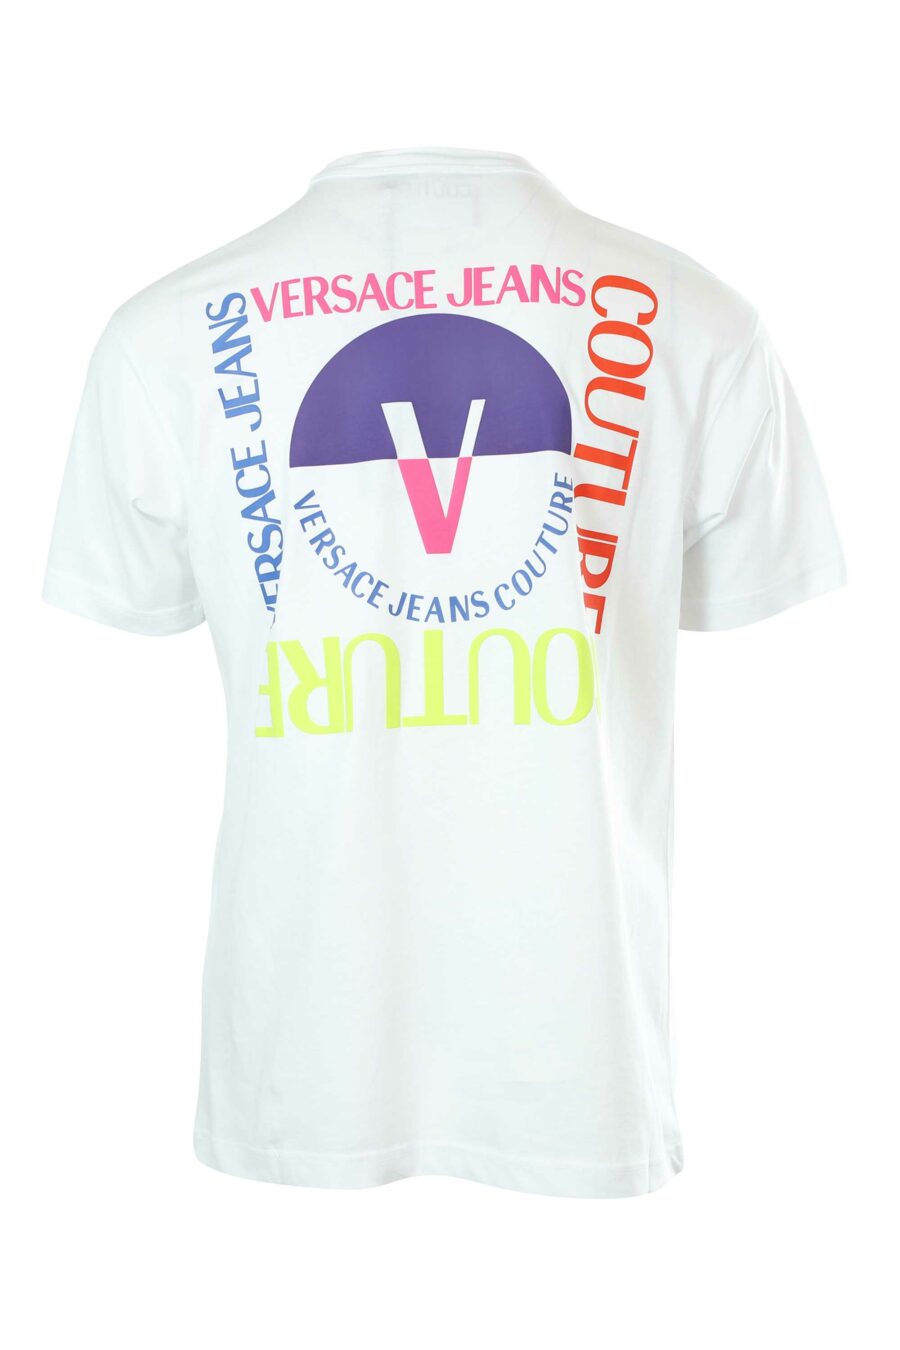 Camiseta blanca con minilogo multicolor - 8052019235029 2